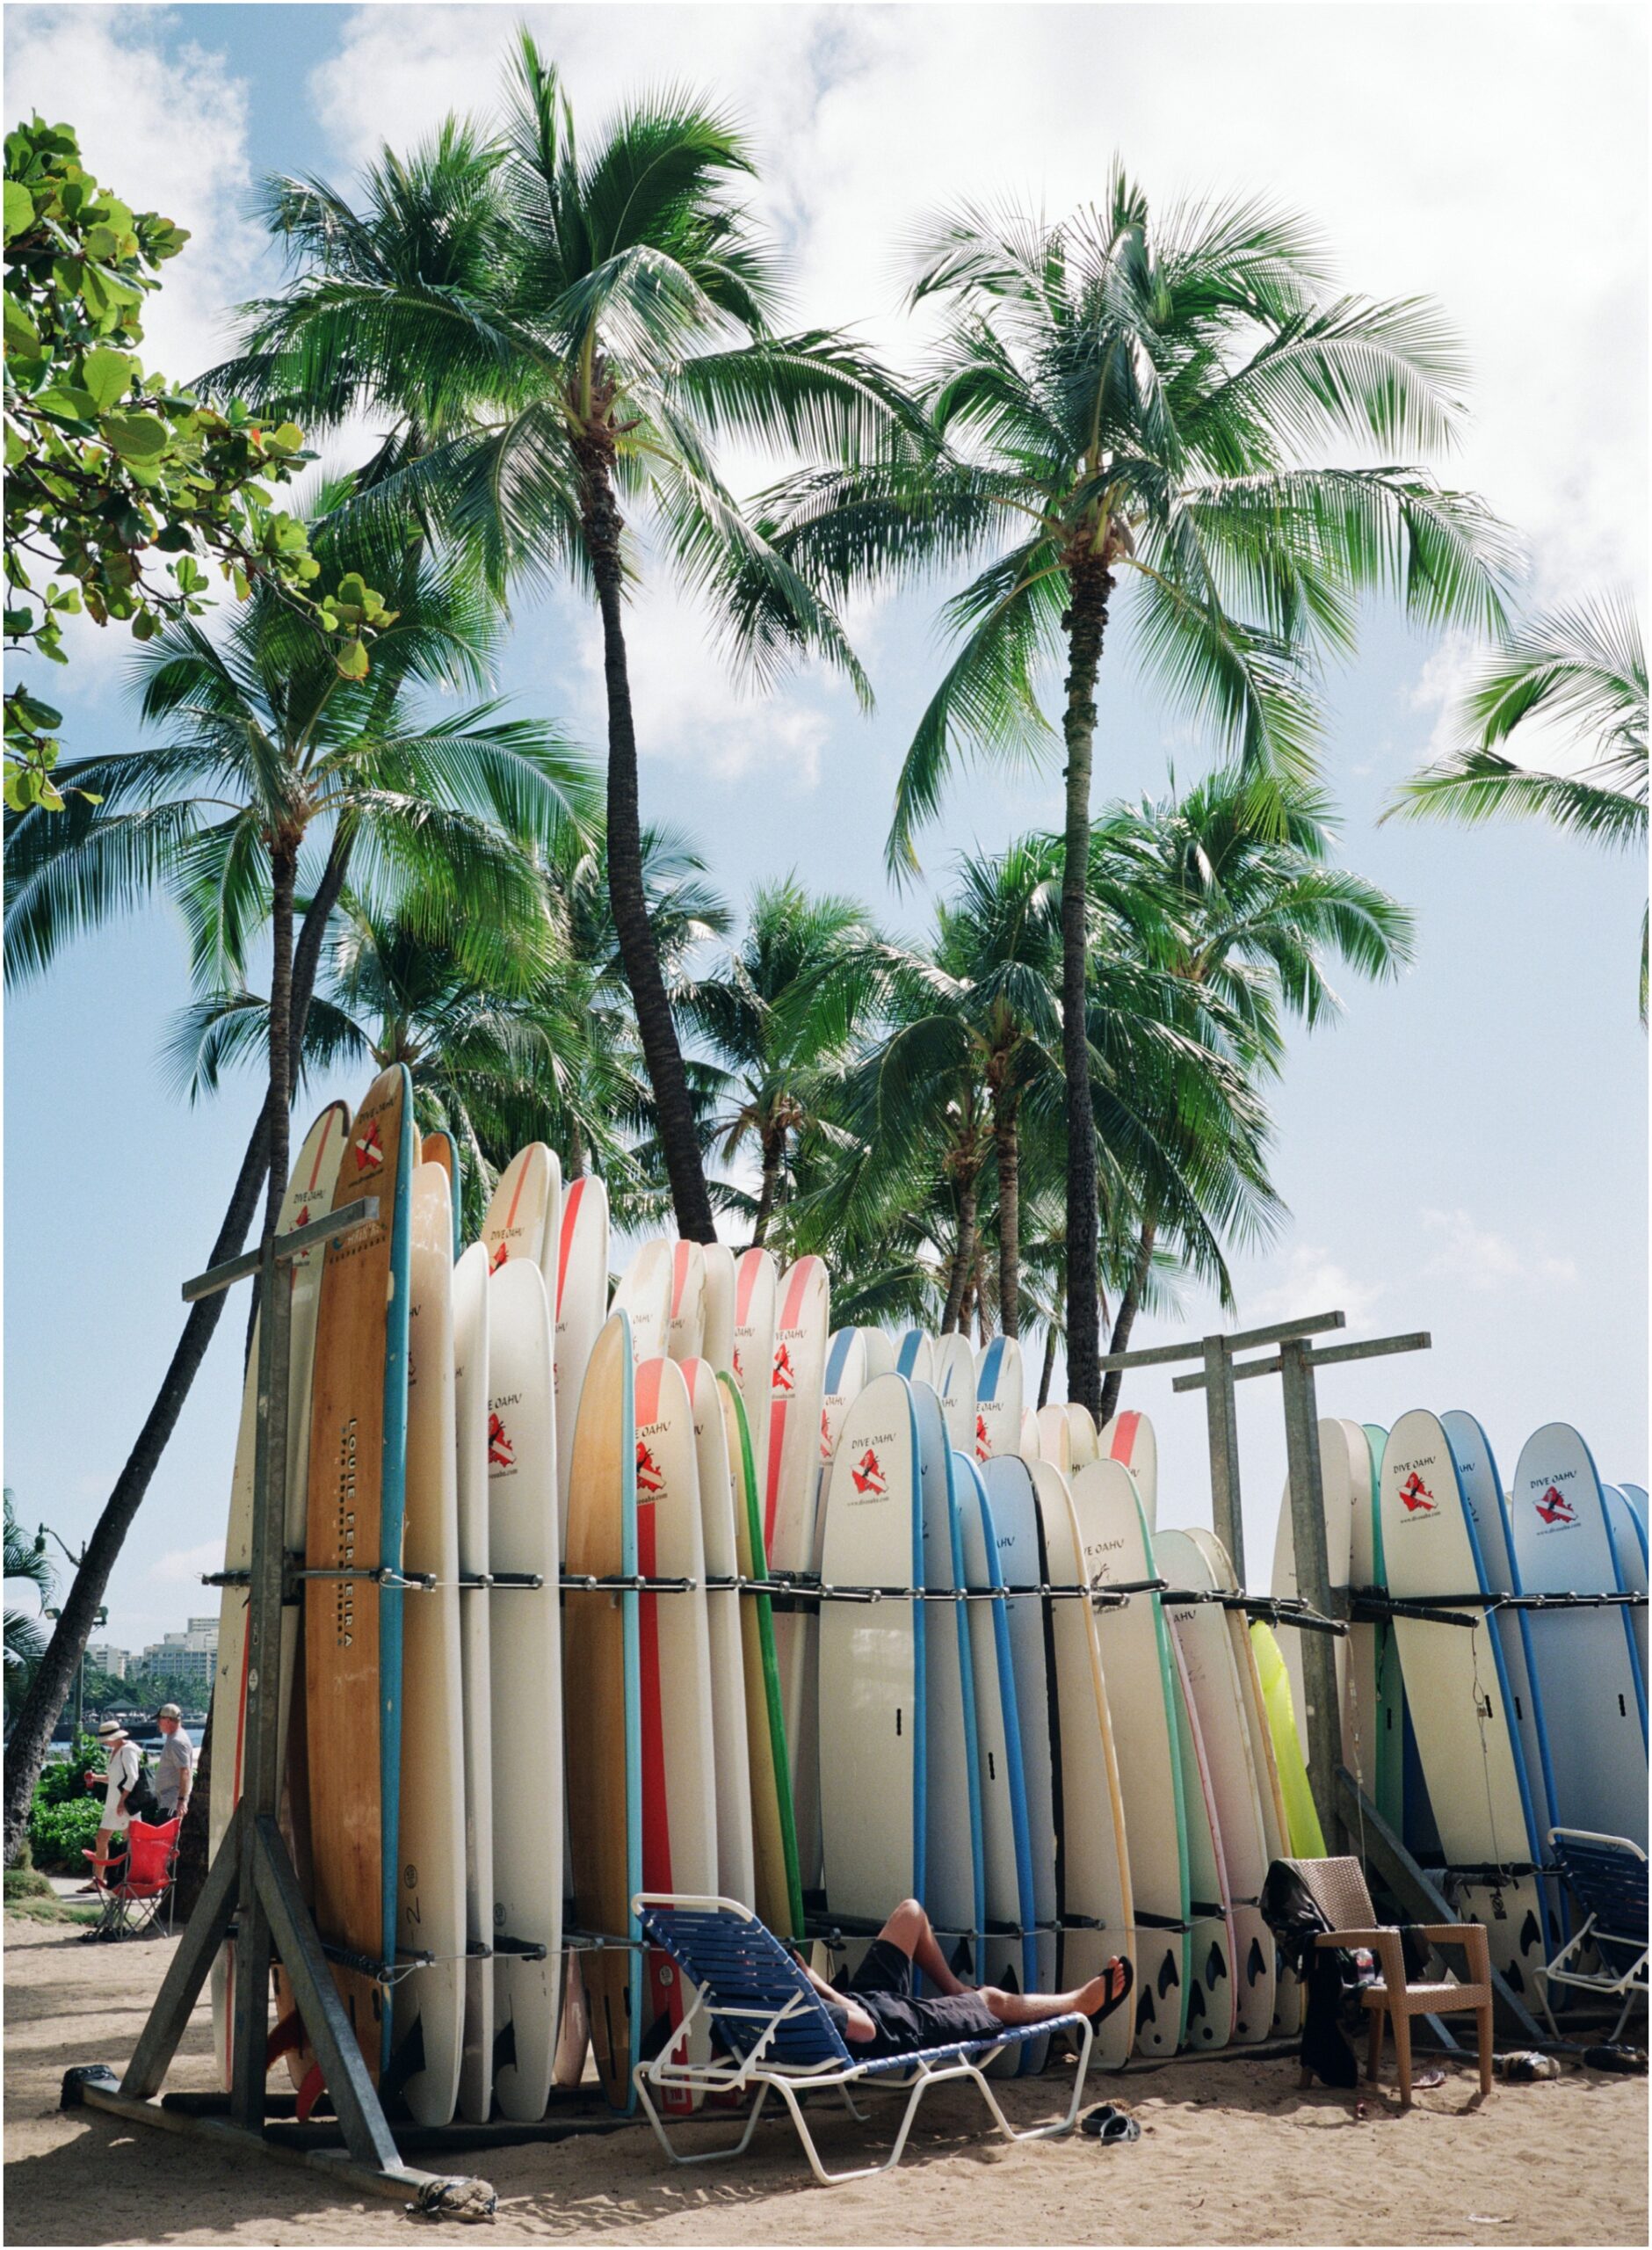 Waikiki Beach surfboards with a man sleeping under them on 120mm film